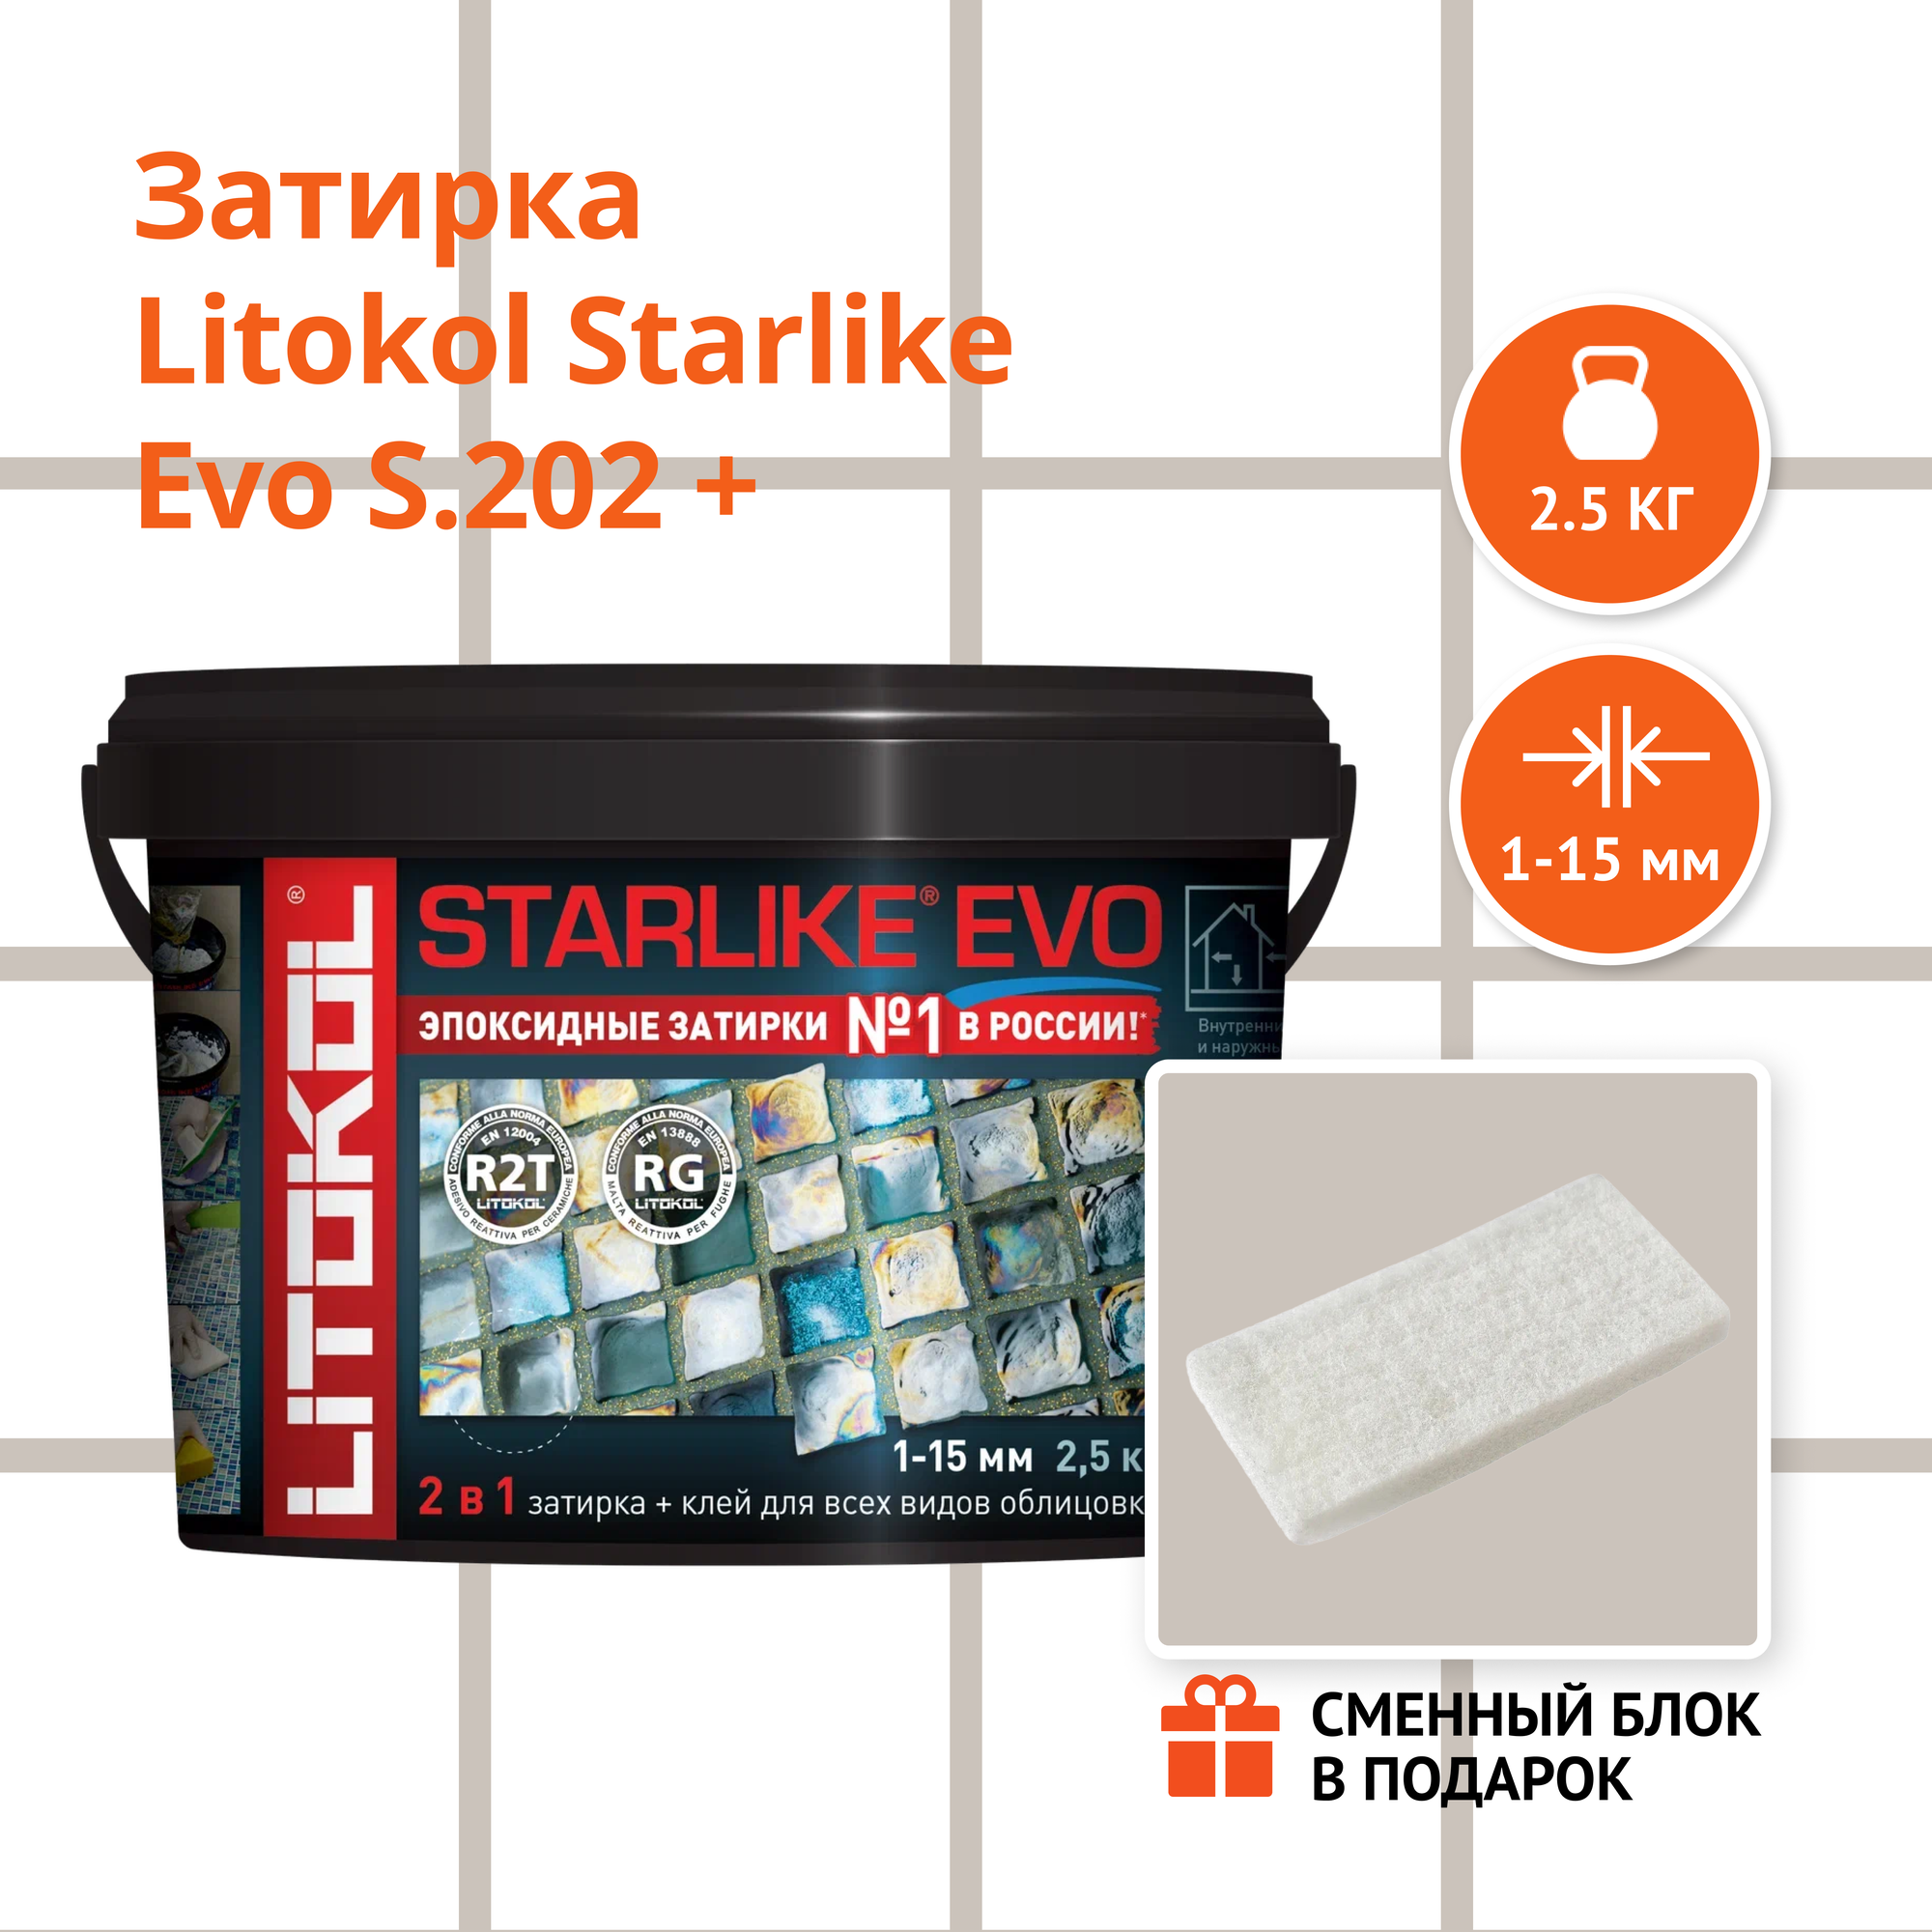 Затирка LITOKOL STARLIKE EVO S.235 CAFFE 2.5 кг + Сменный блок в подарок